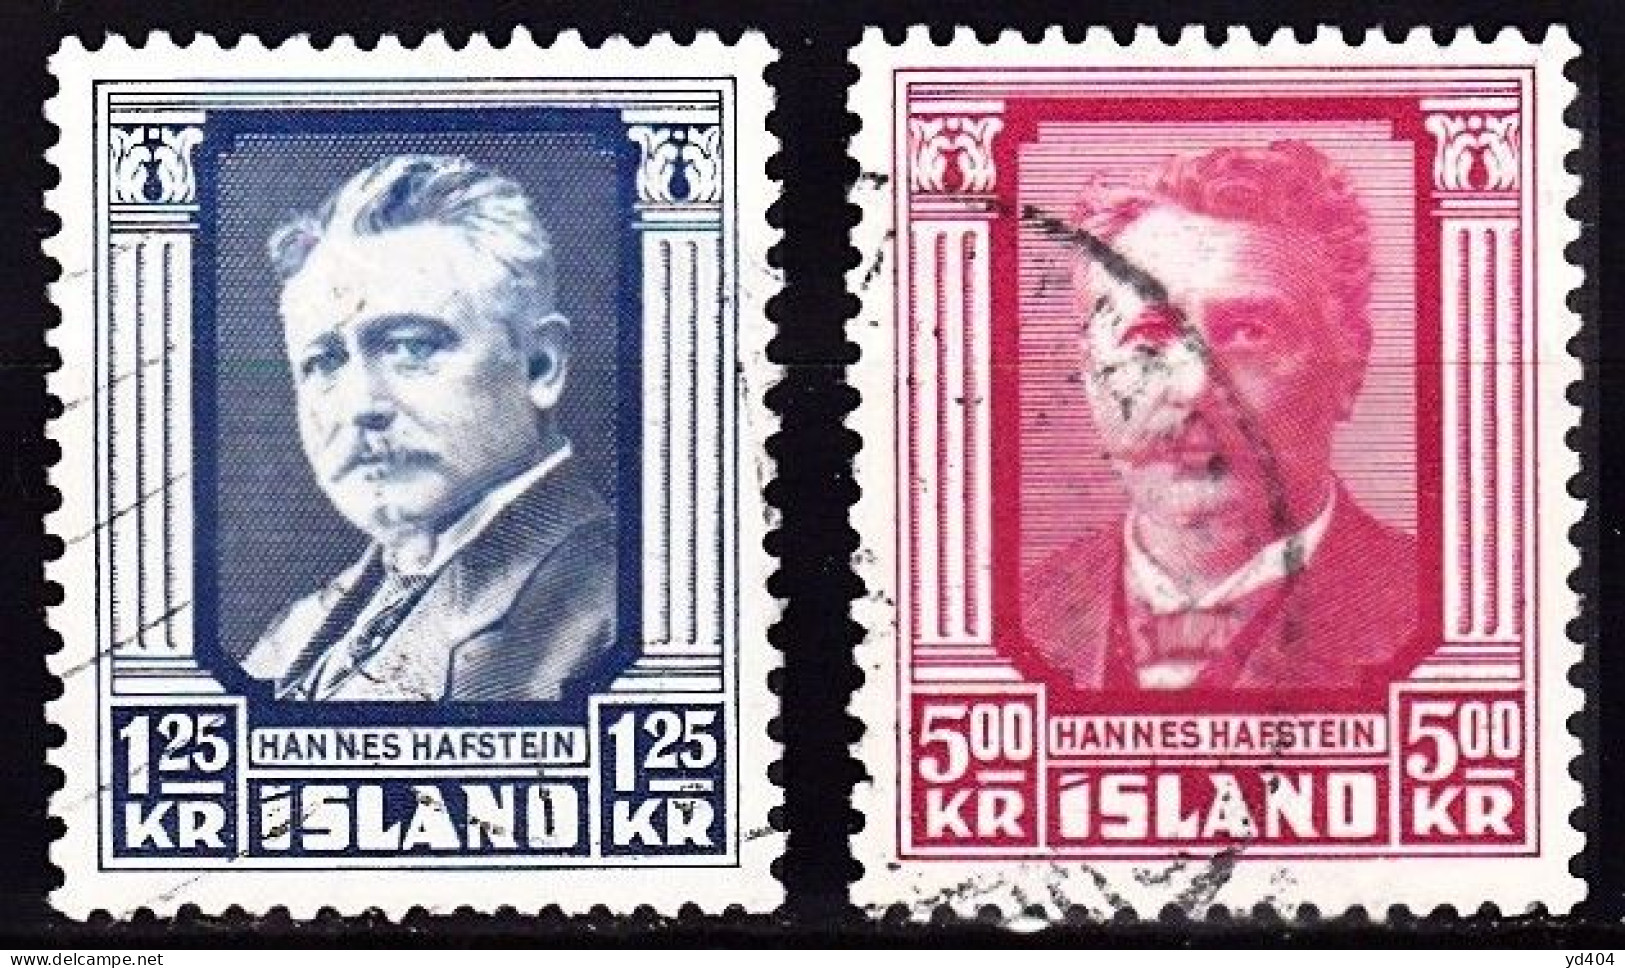 IS059B – ISLANDE – ICELAND – 1954 – HANNES HAFSTEIN – MI # 293-295 USED - Used Stamps